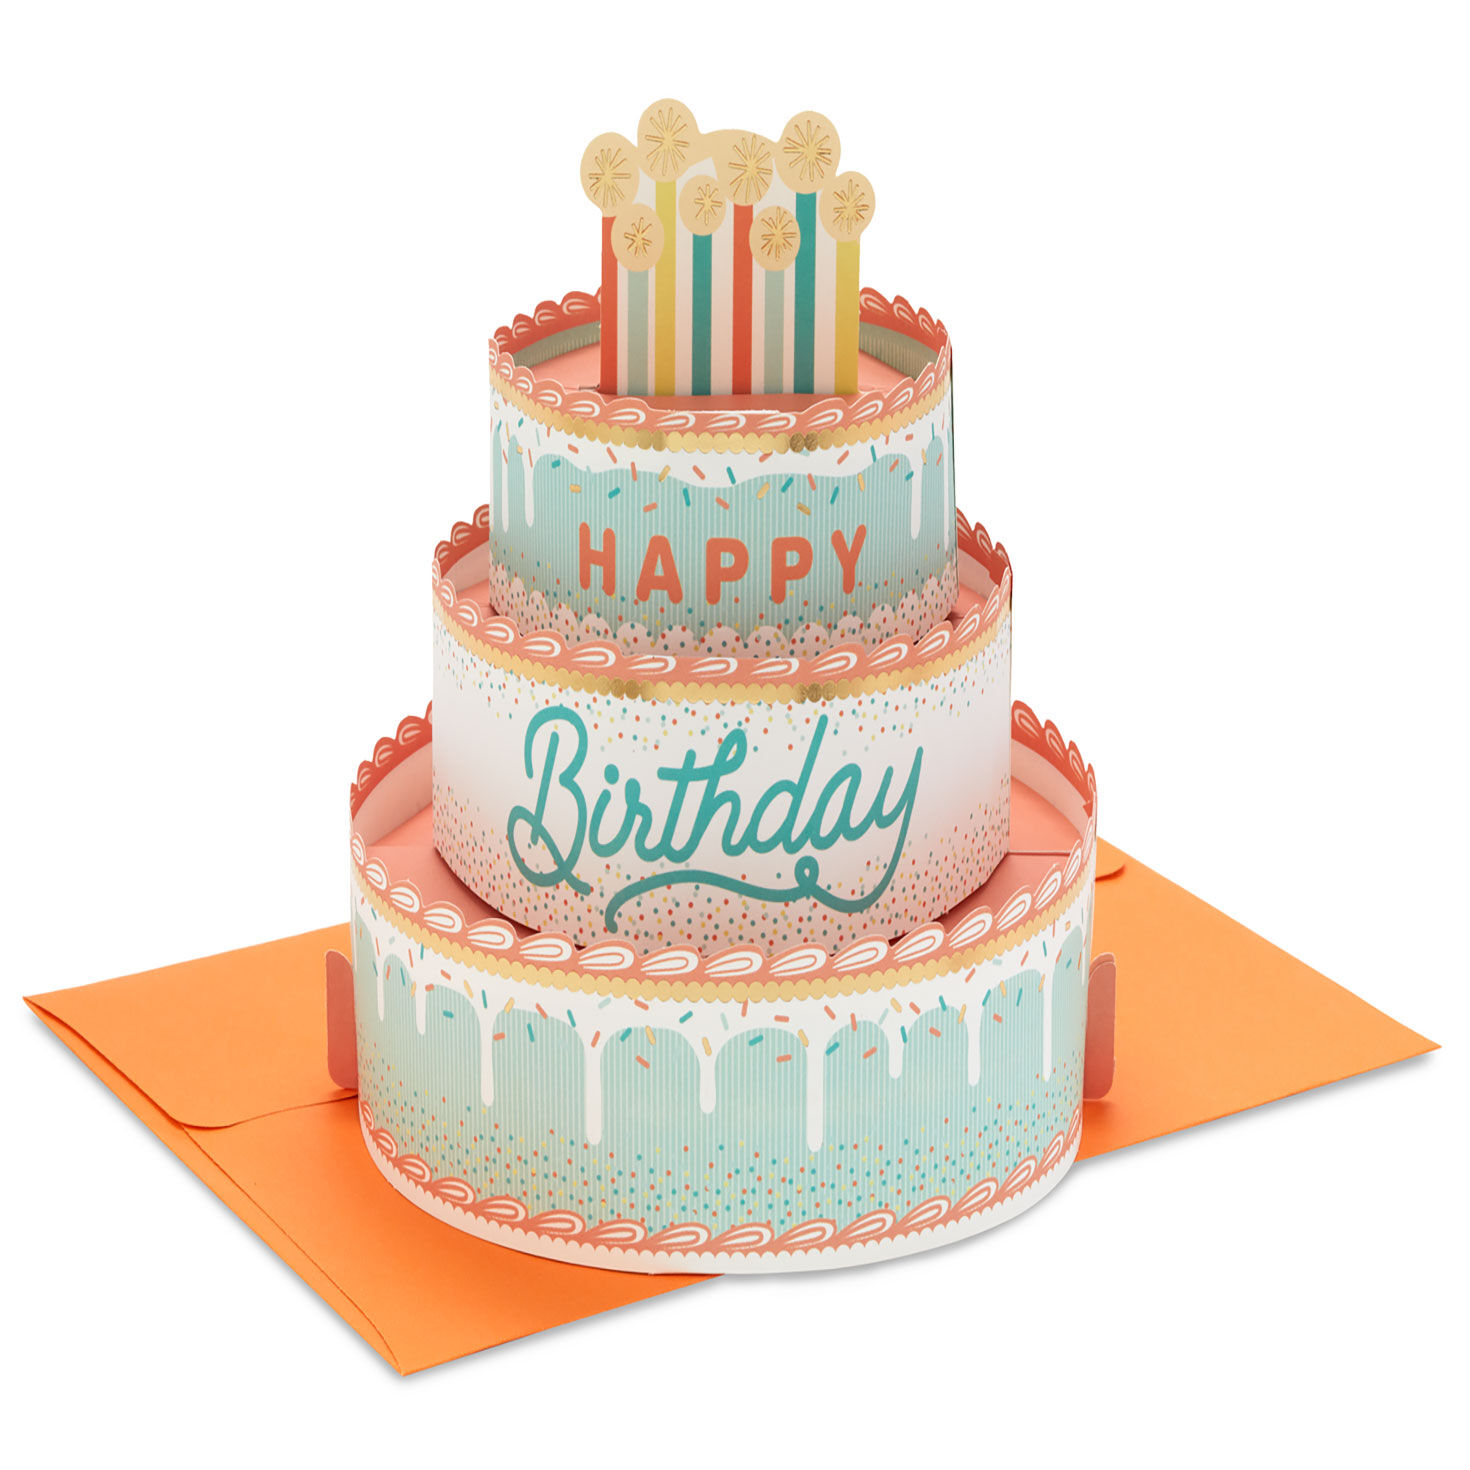 Birthday Cake Pop-Up Card 3 Original Designs - YouTube